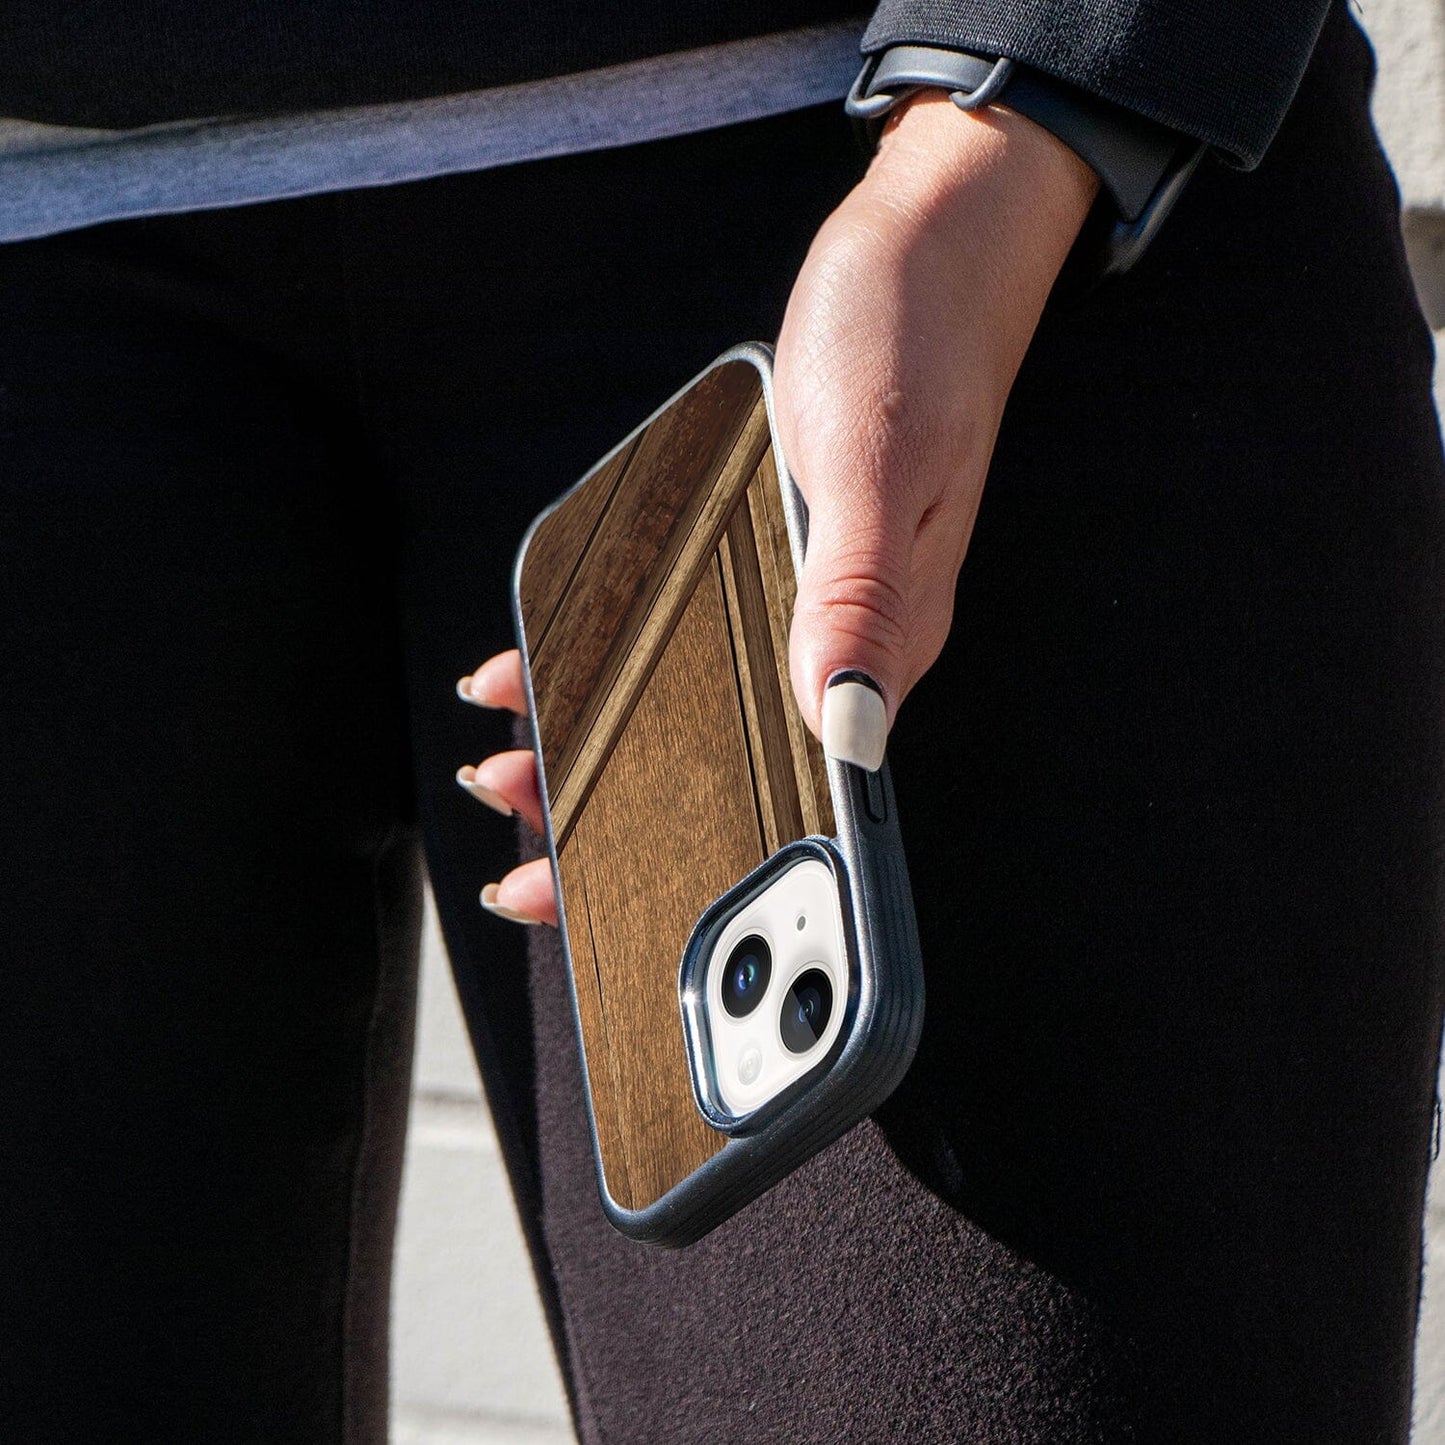 MagSafe iPhone 14 Plus Wood Case